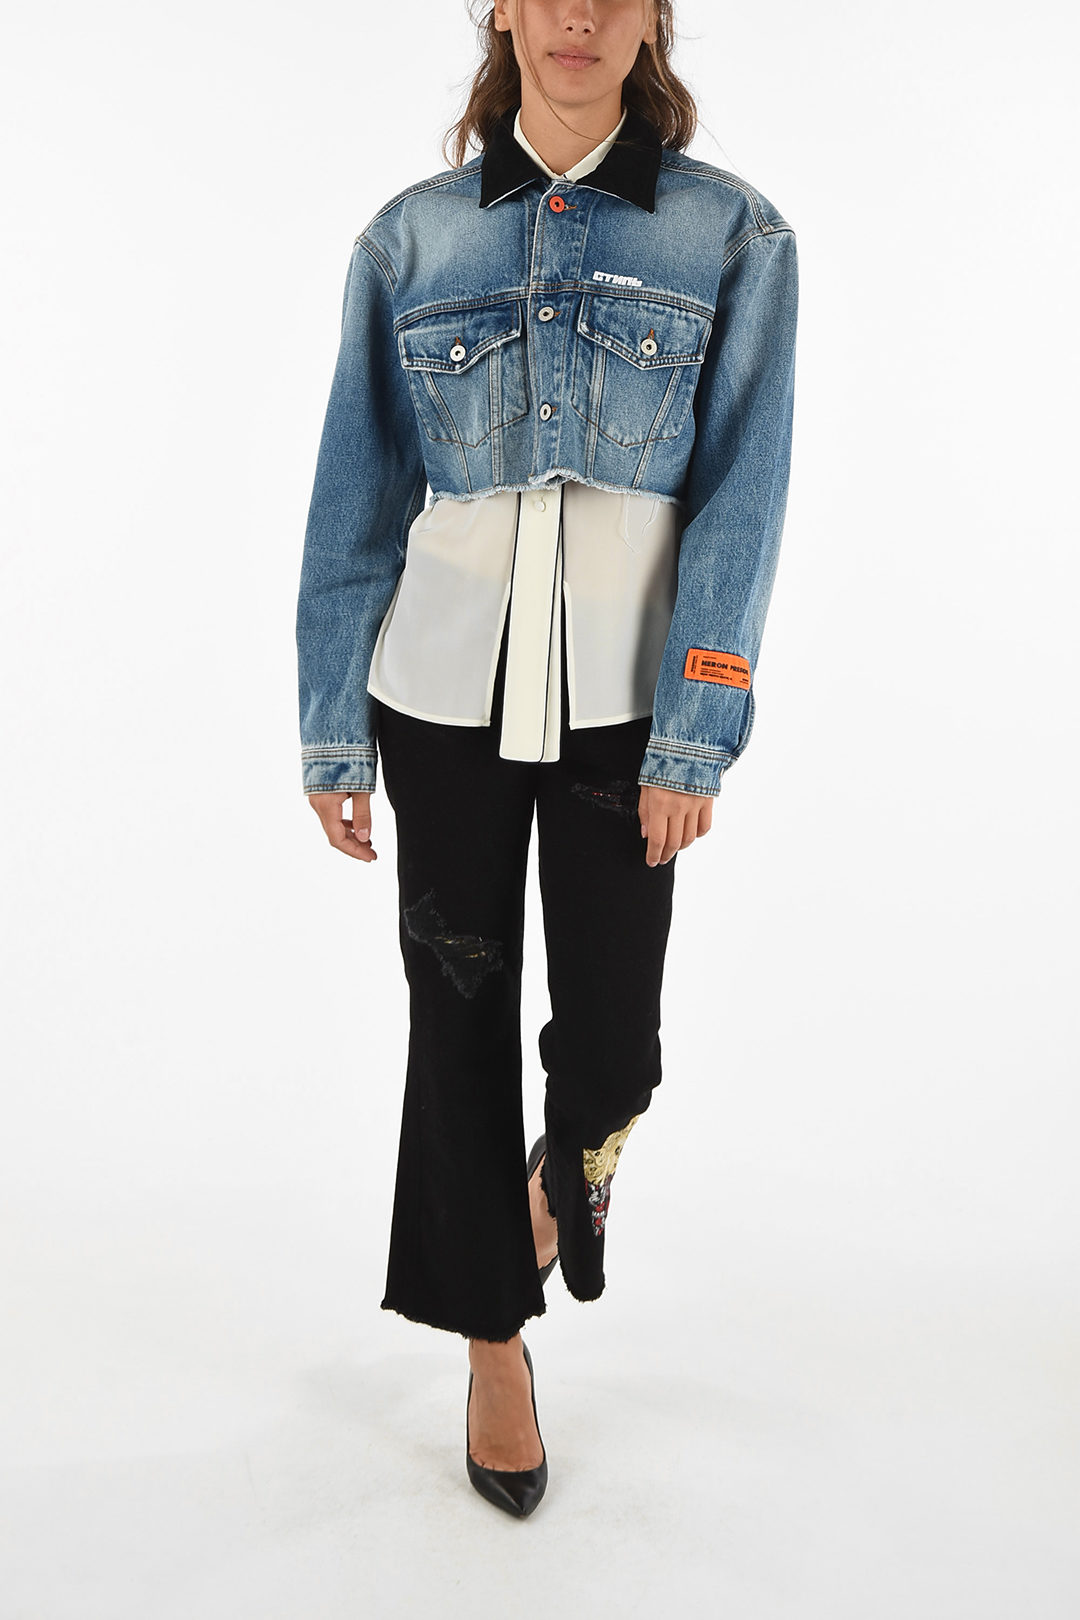 Heron Preston waist length denim jacket women - Glamood Outlet